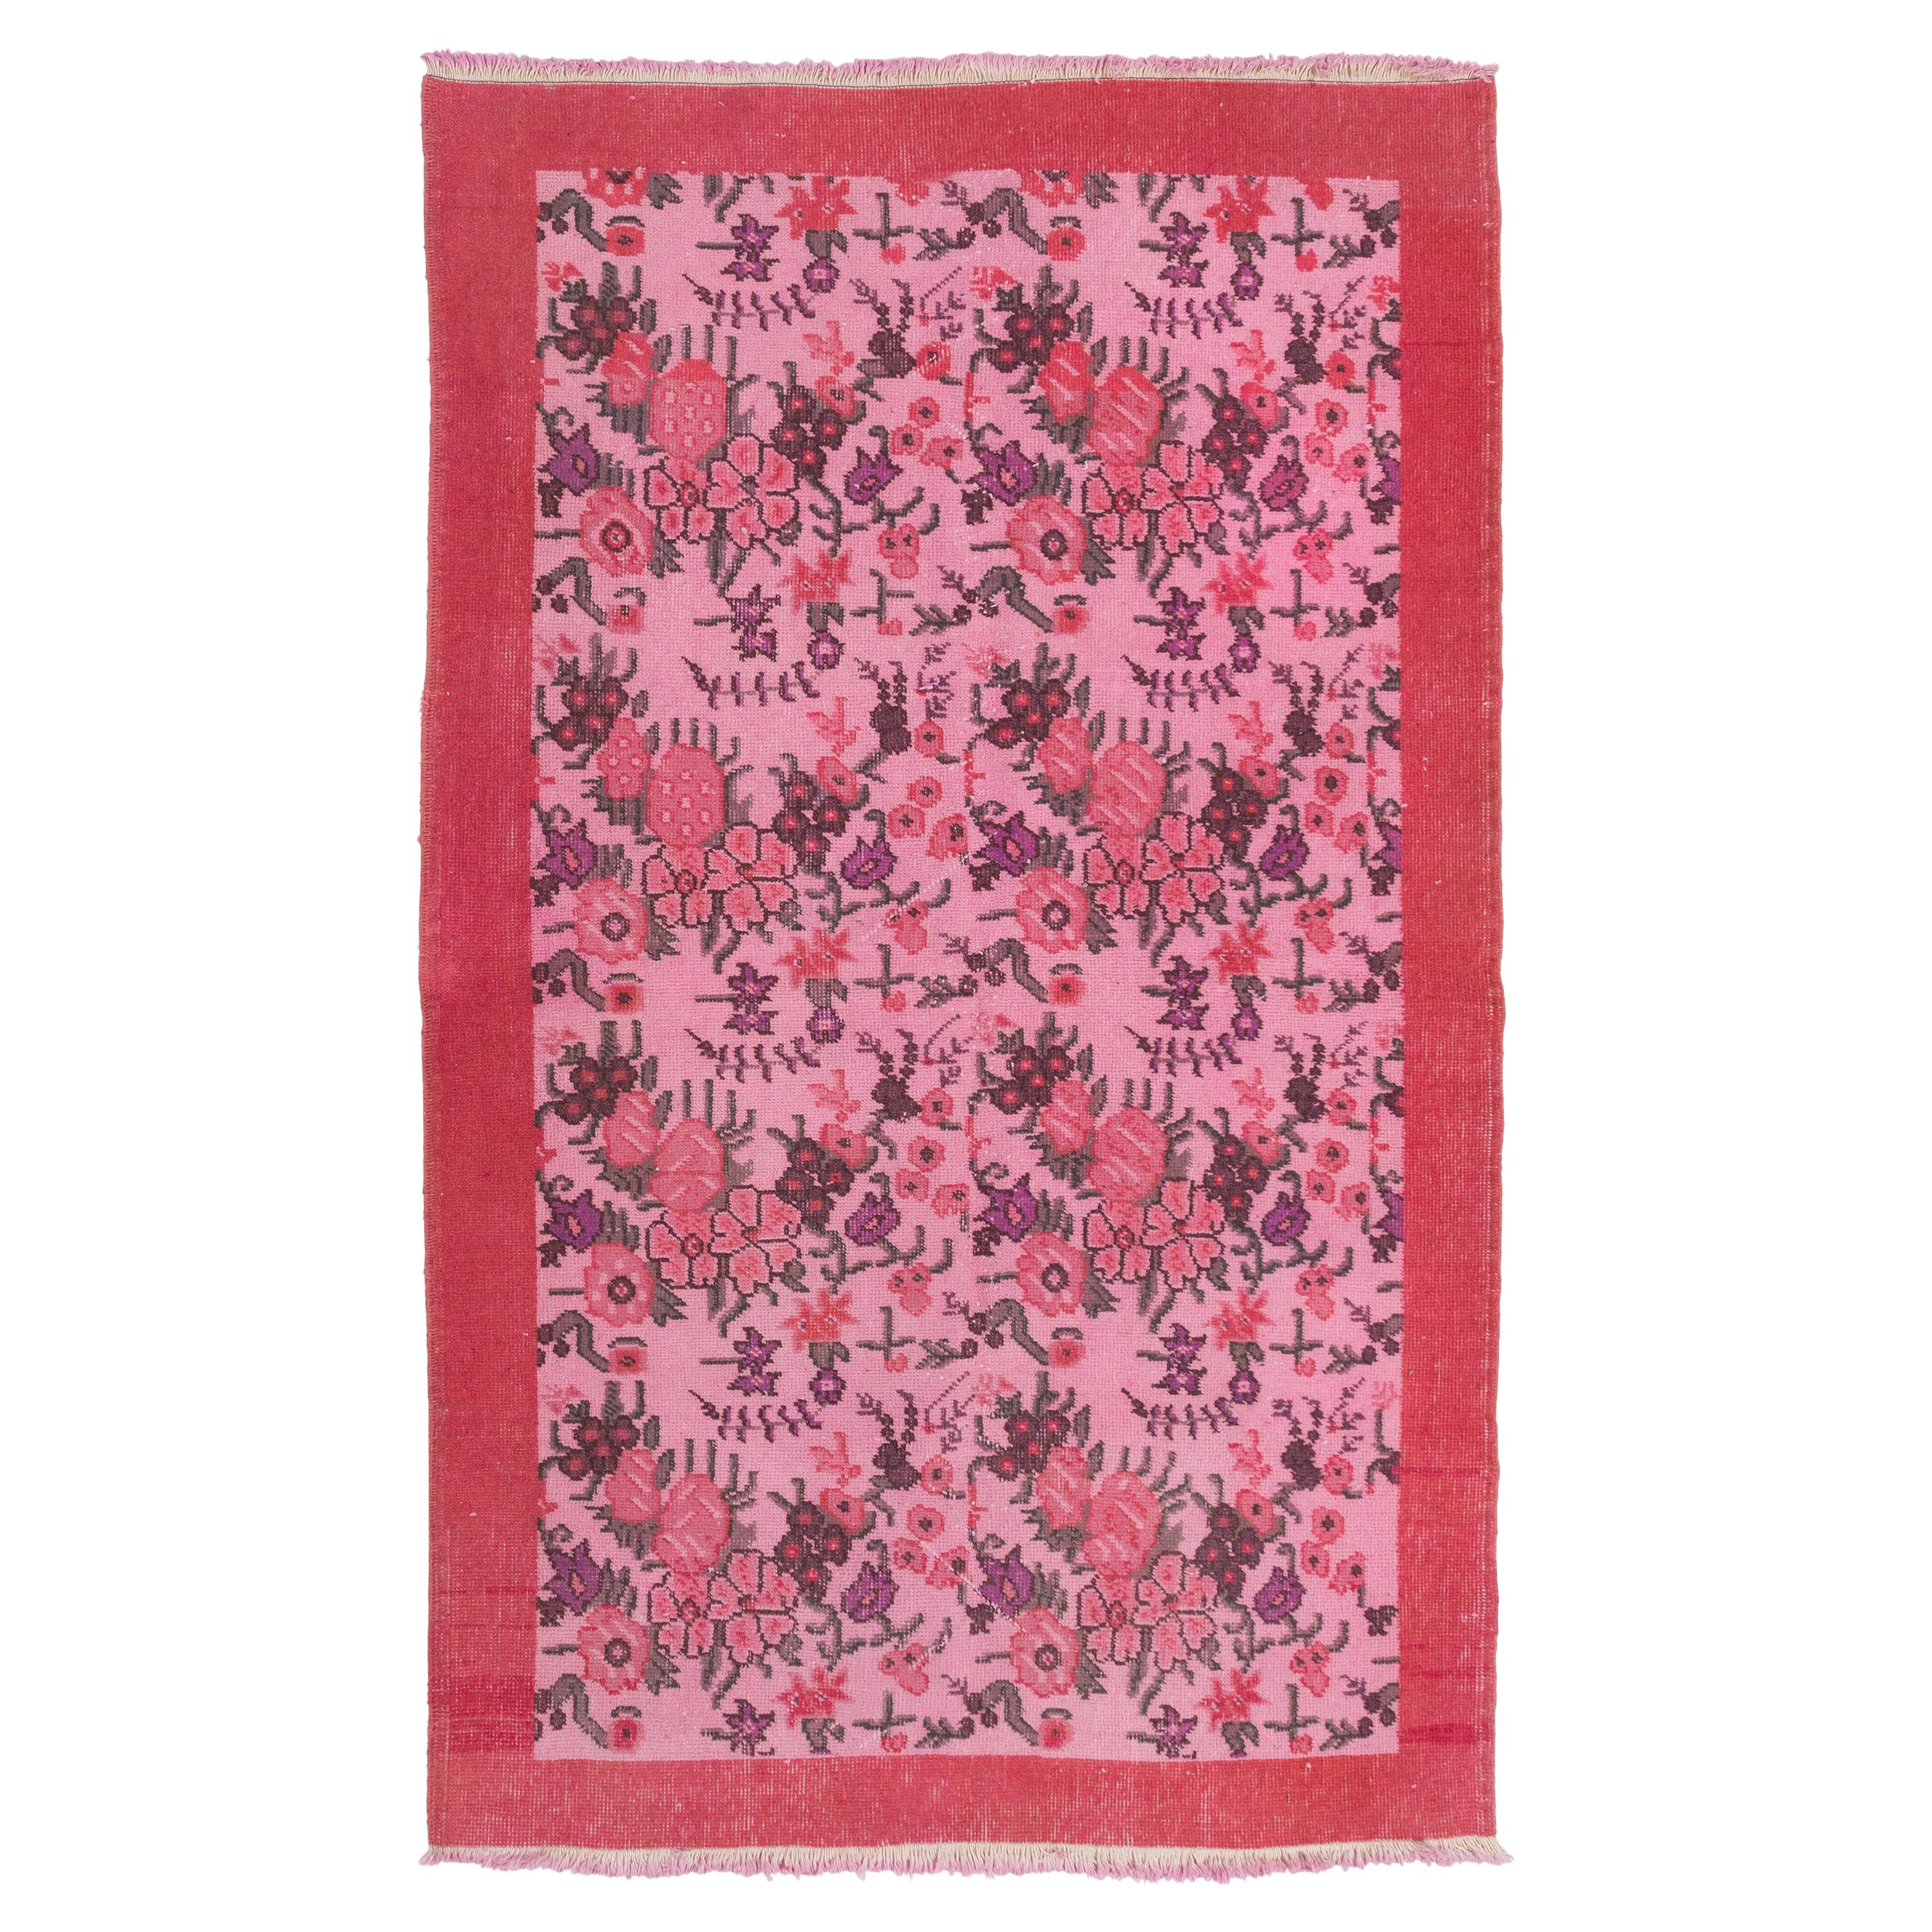 4x6.4 Ft Floral Patterned Modern Hand-Knotted Vintage Turkish Rug in Pink